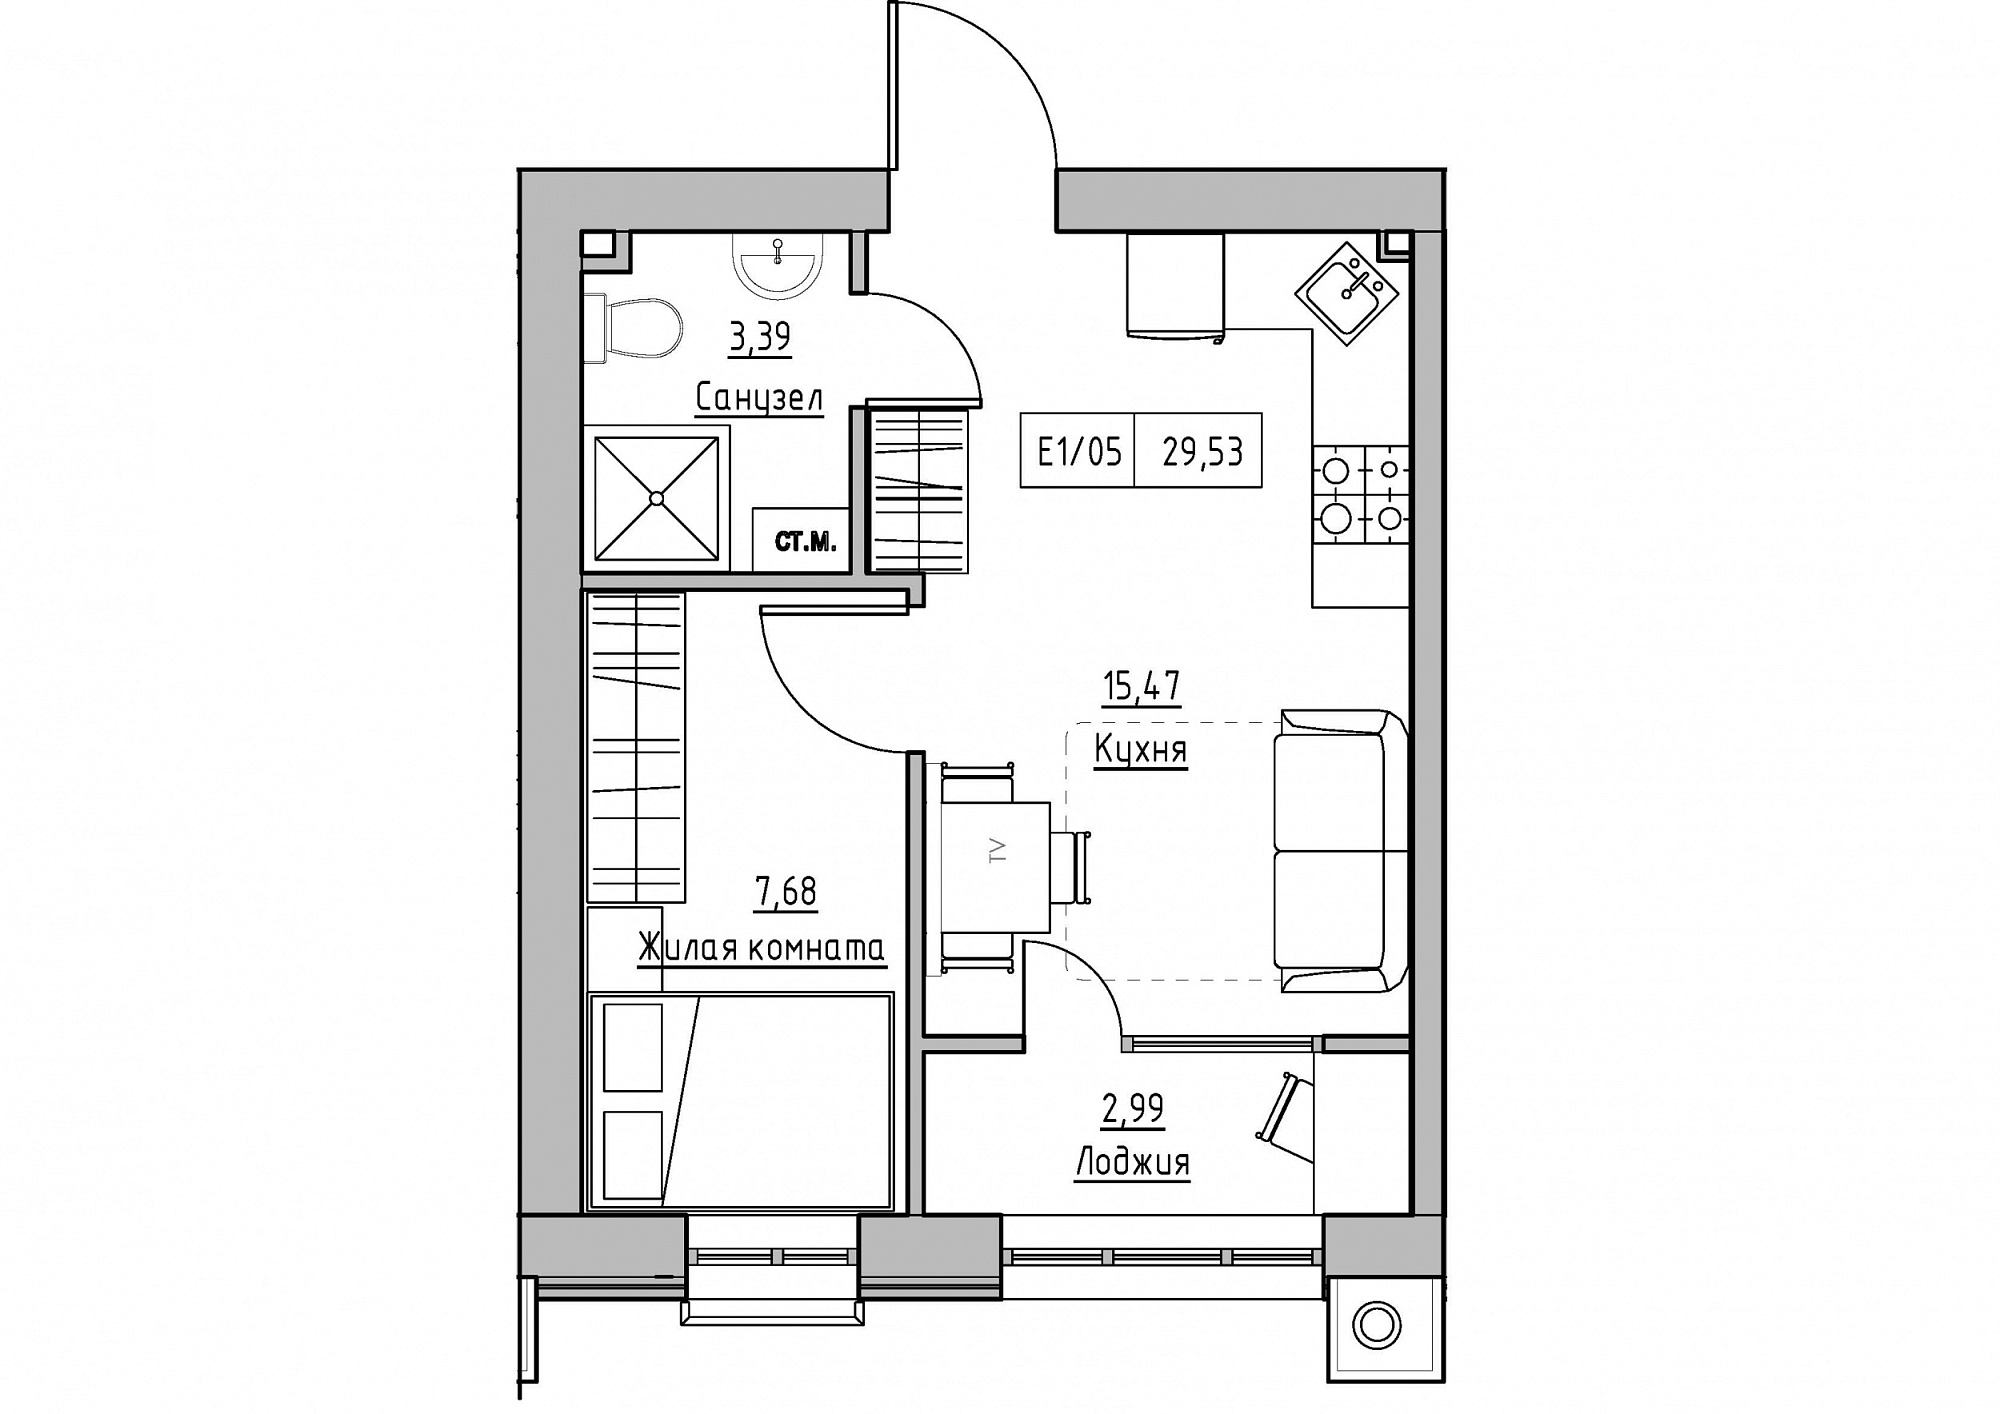 Planning 1-rm flats area 29.53m2, KS-011-04/0010.